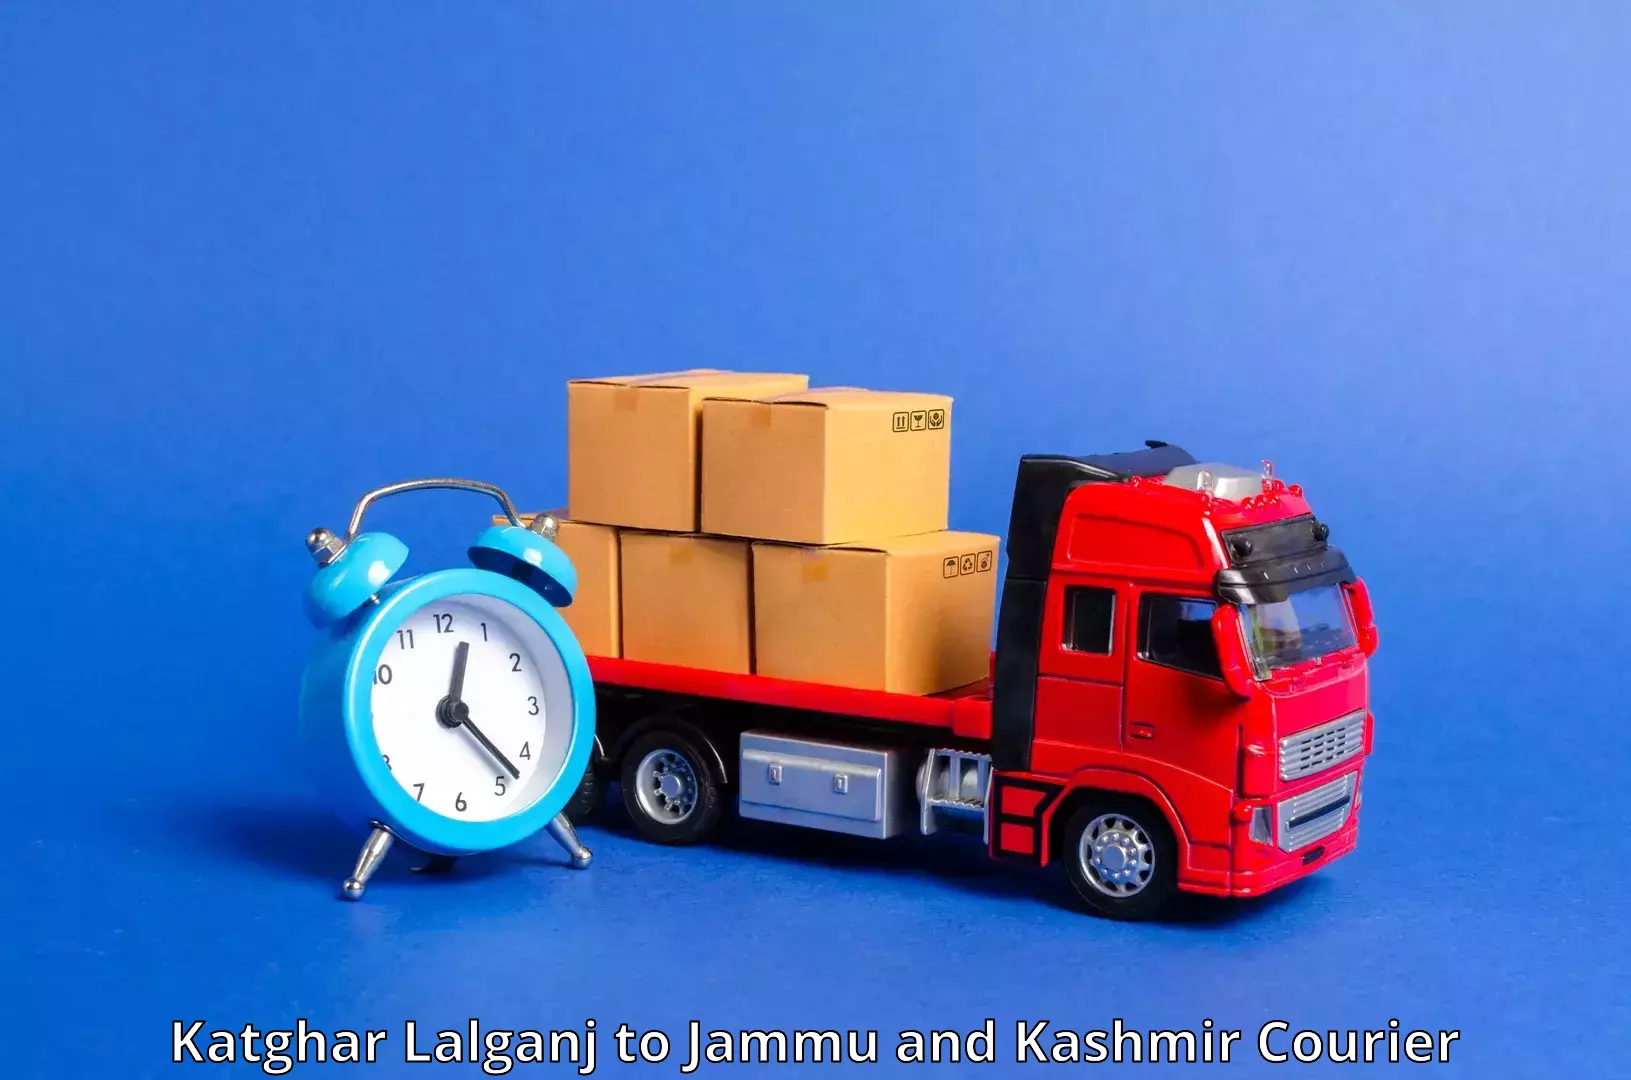 Courier service efficiency Katghar Lalganj to Jammu and Kashmir